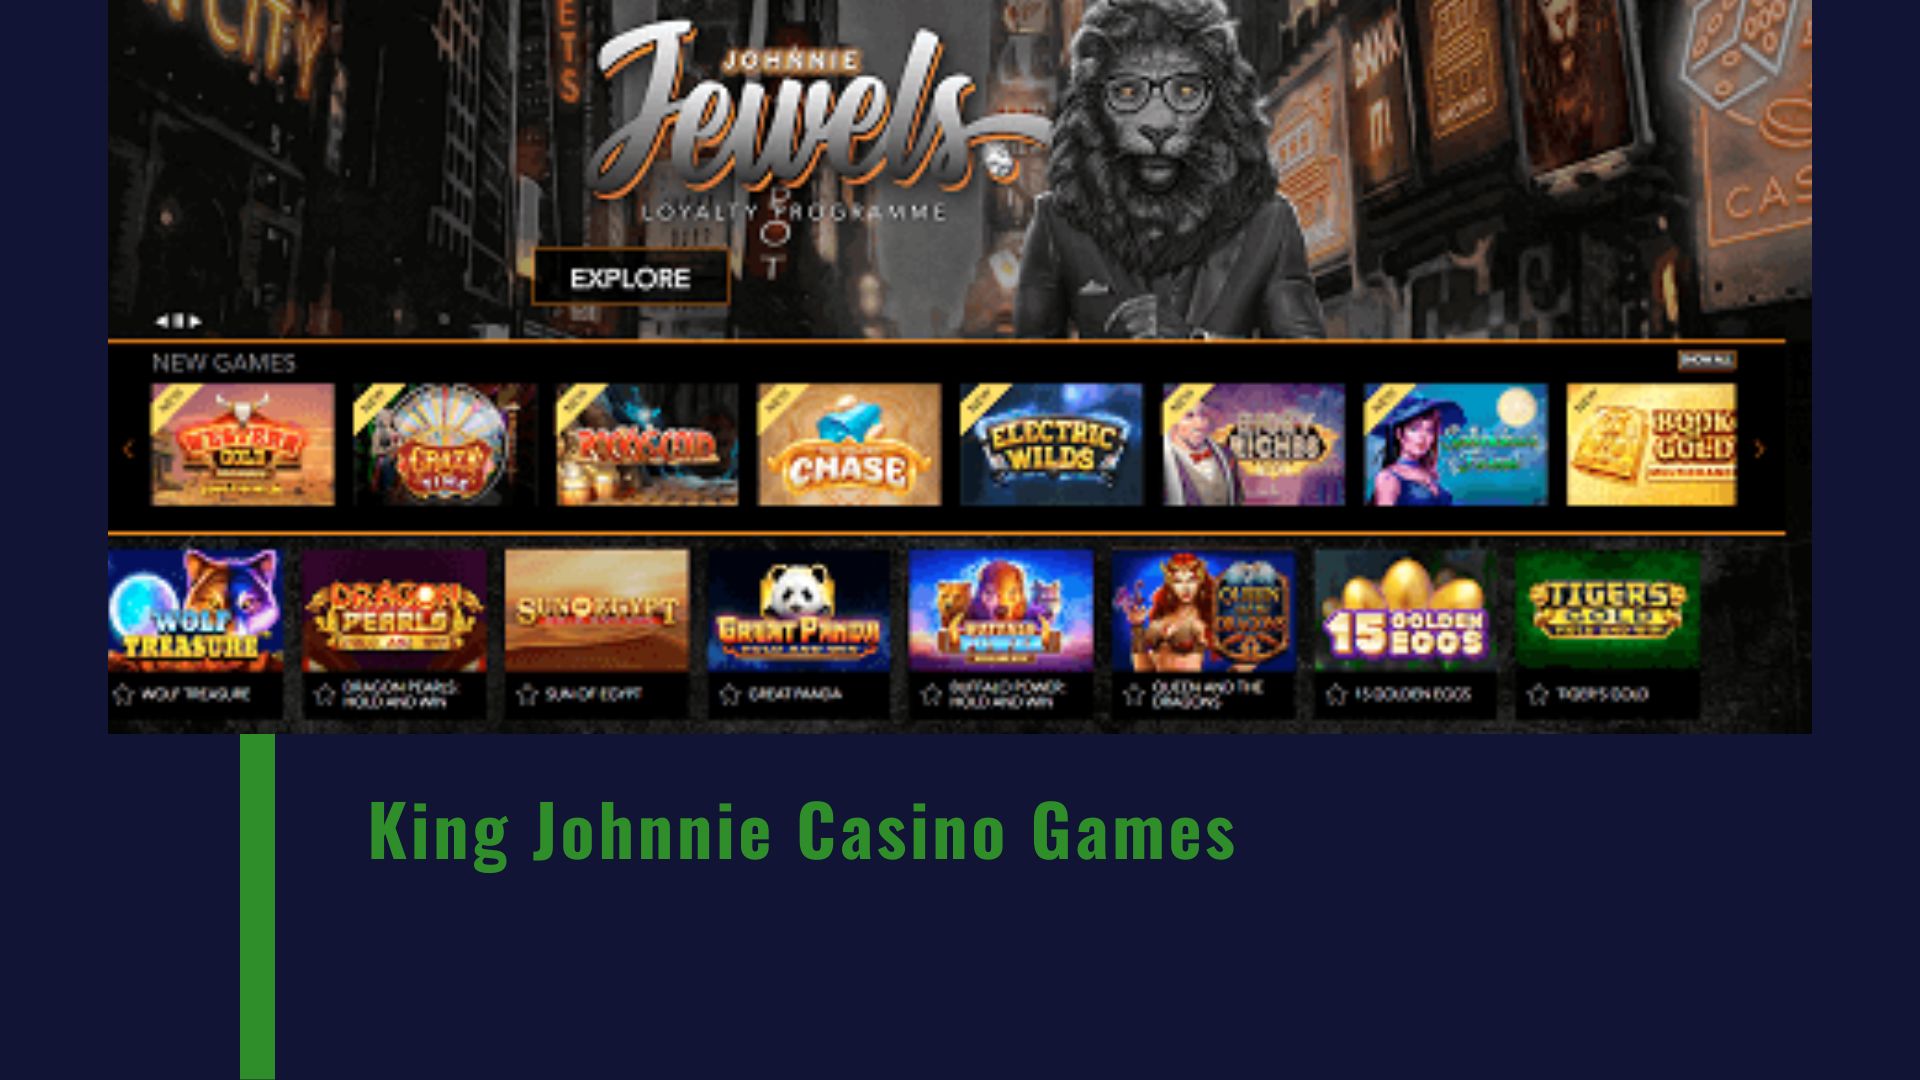 King Johnnie Casino Games